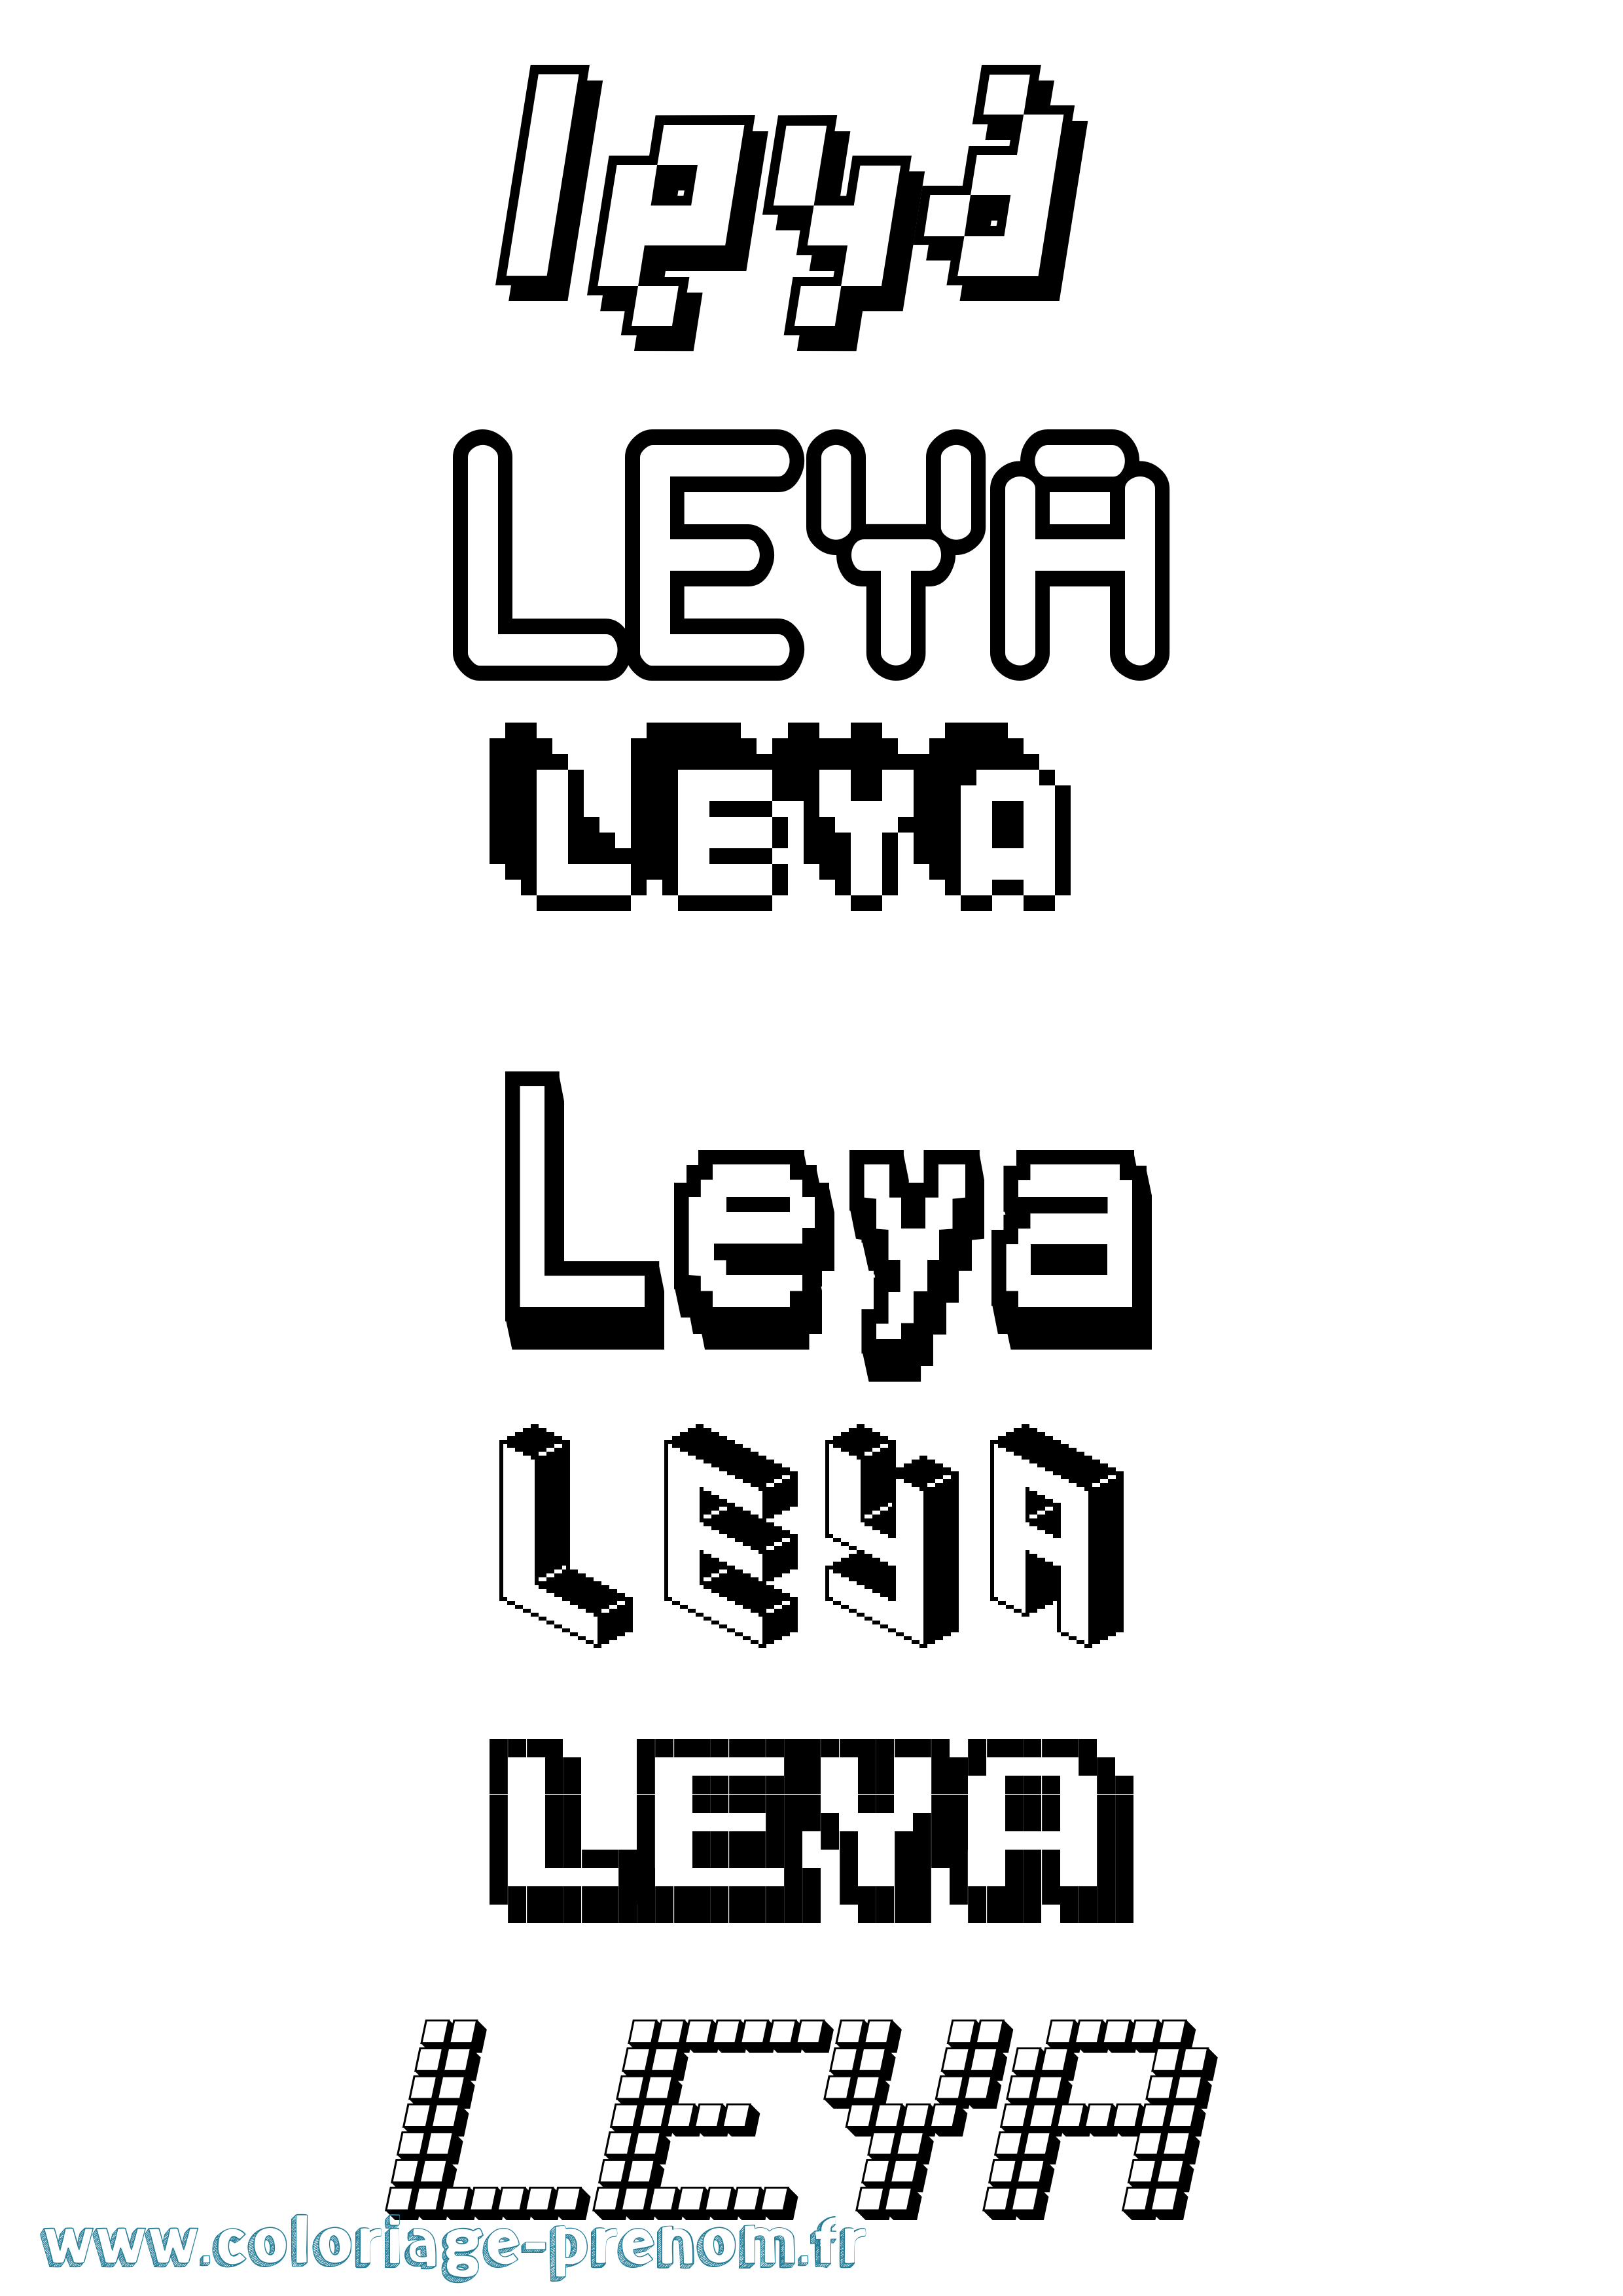 Coloriage prénom Leya Pixel